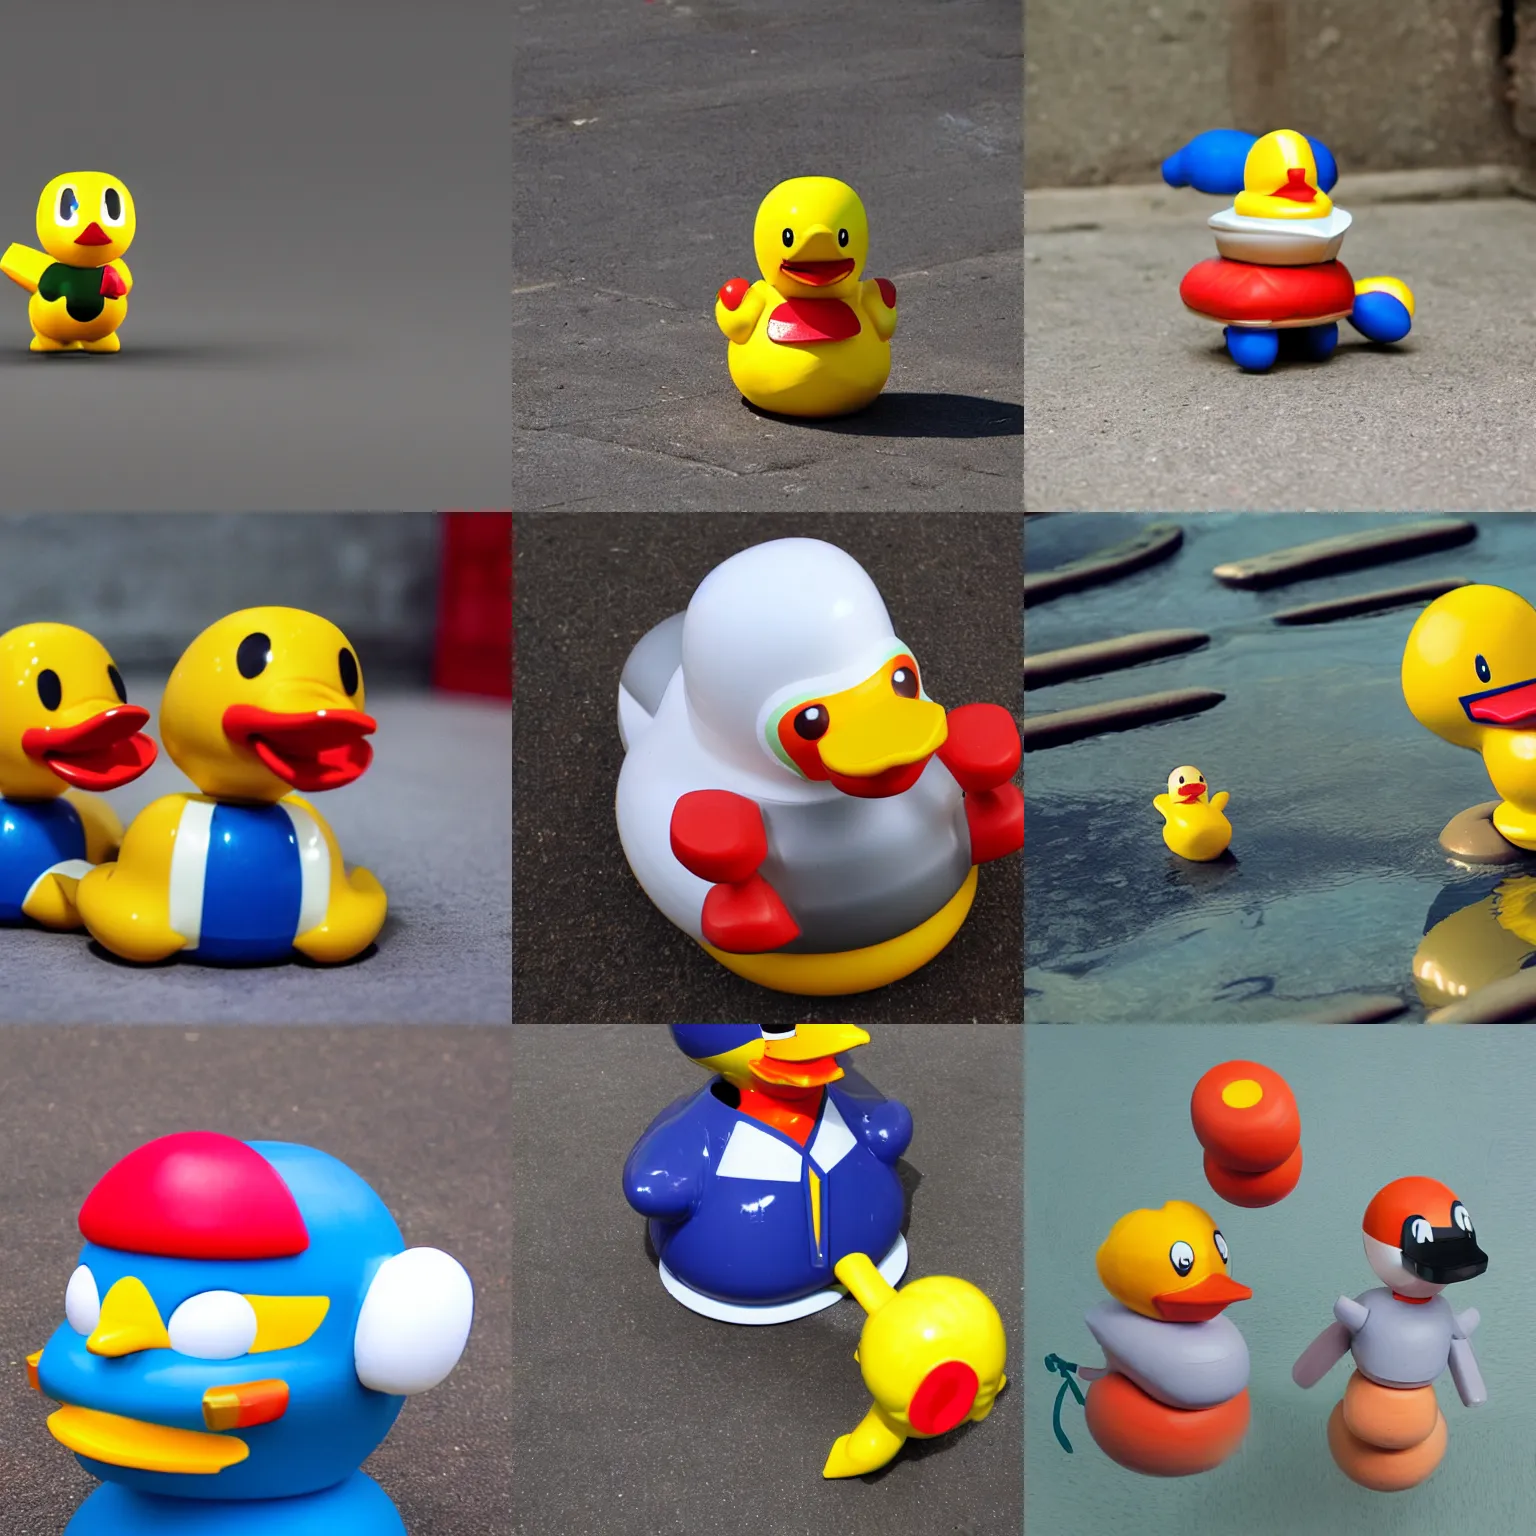 Prompt: Bomberman rubber duck